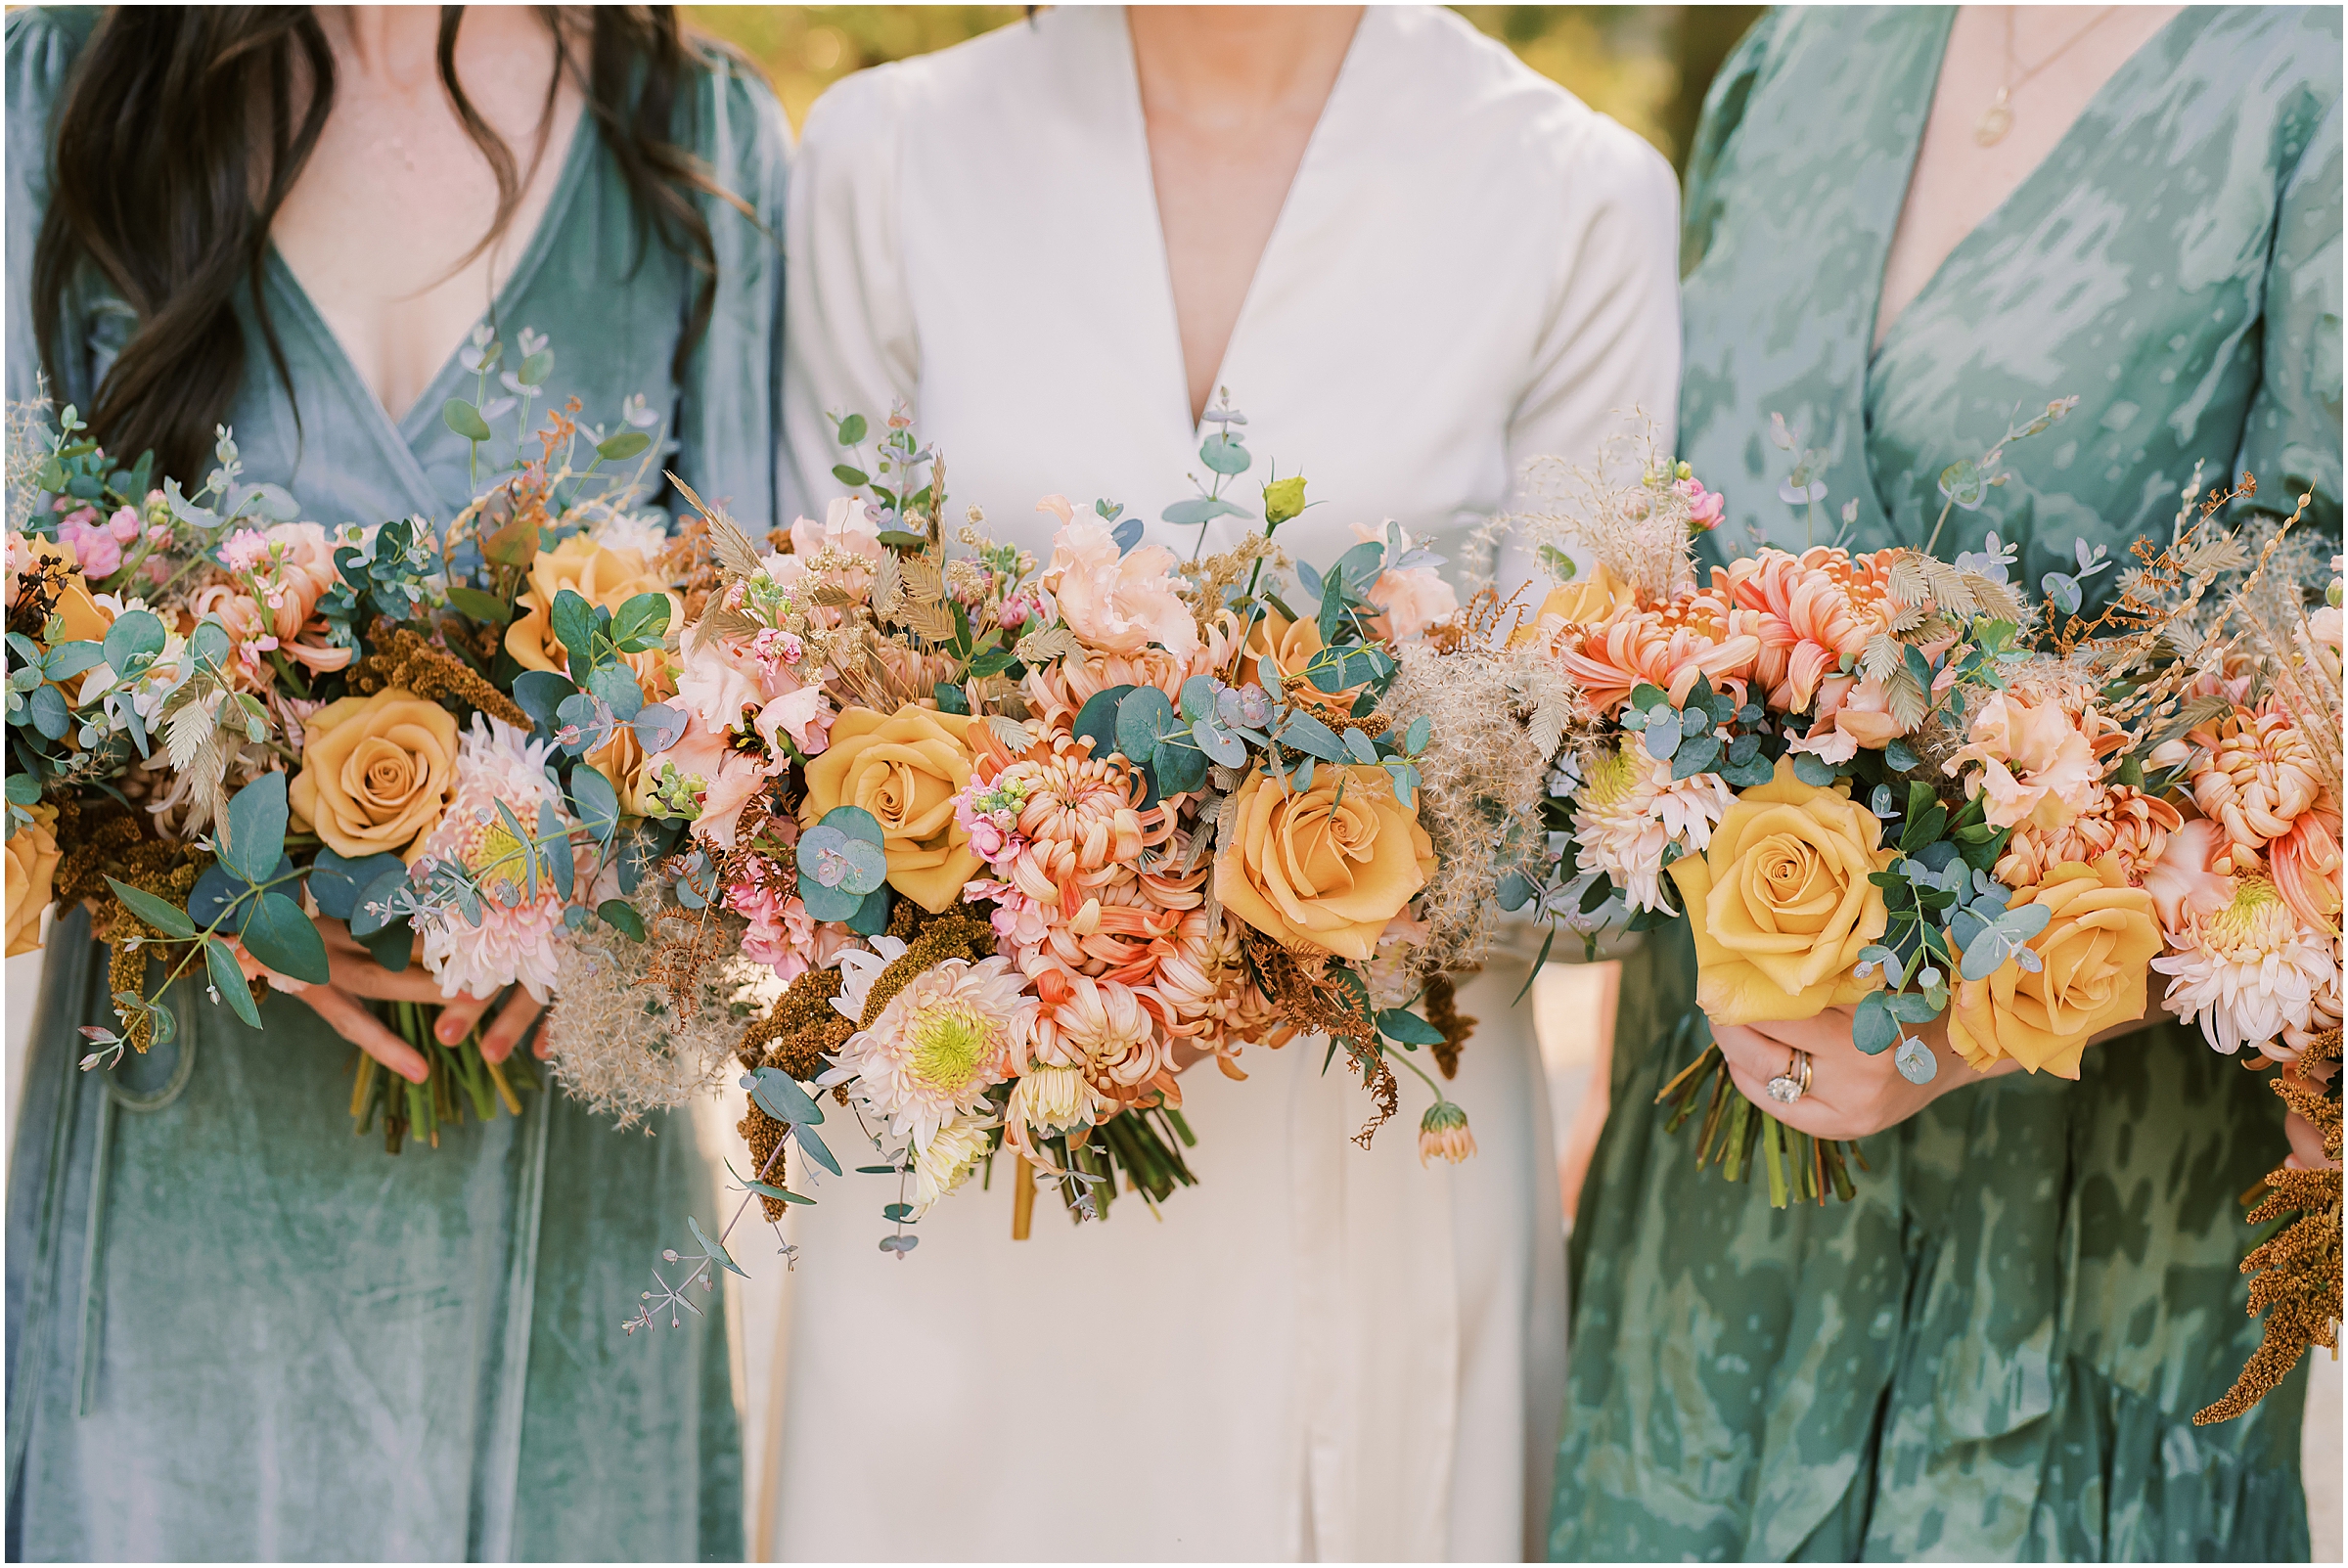 Vibrant, warm-toned wedding bouquets